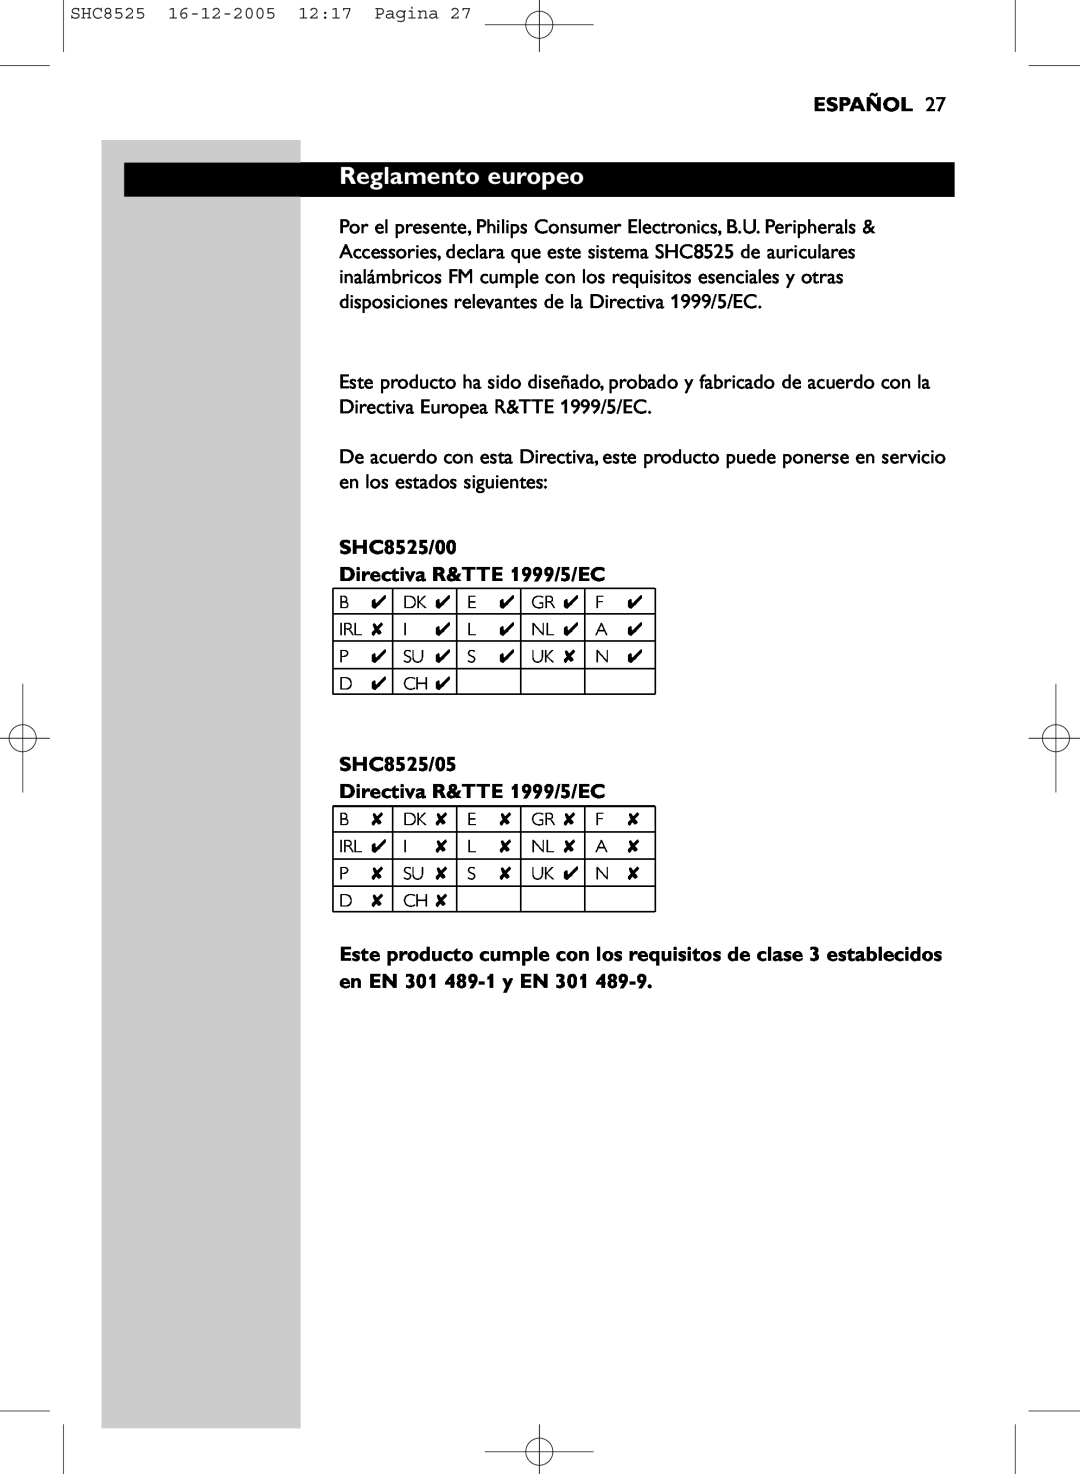 Event electronic manual Reglamento europeo, Español, SHC8525/00 Directiva R&TTE 1999/5/EC 